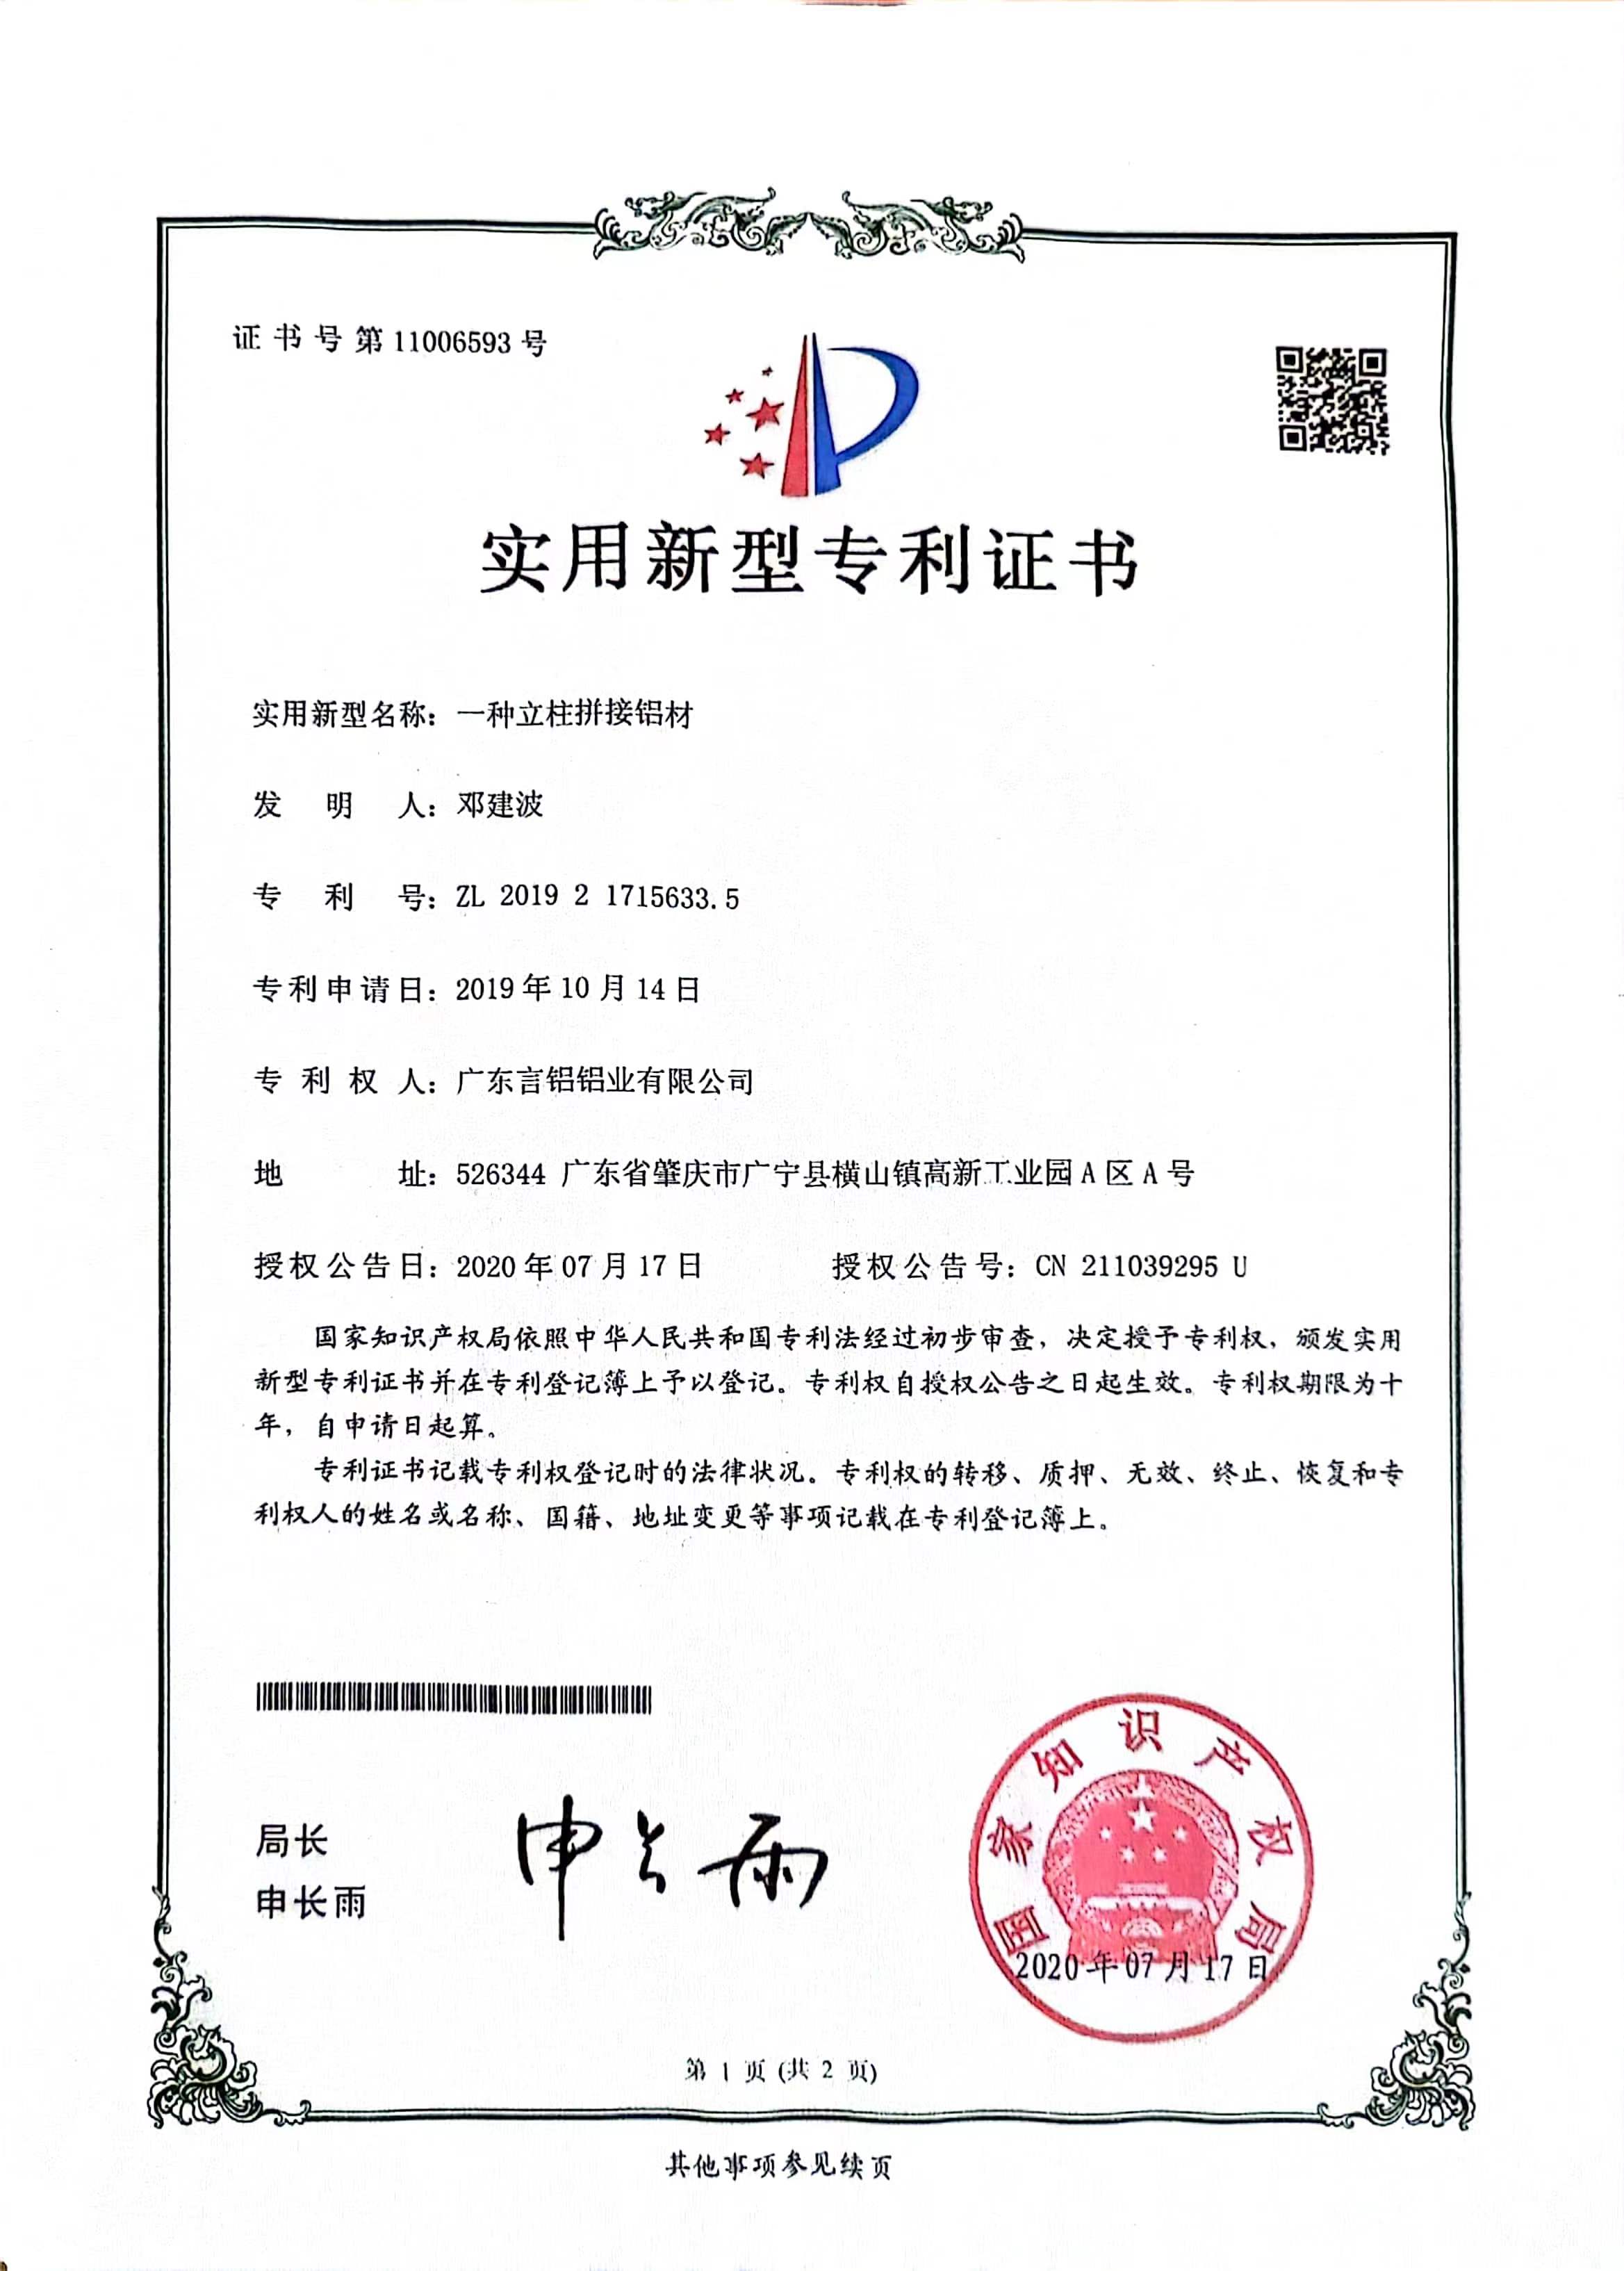 Patent certificate 1.jpg